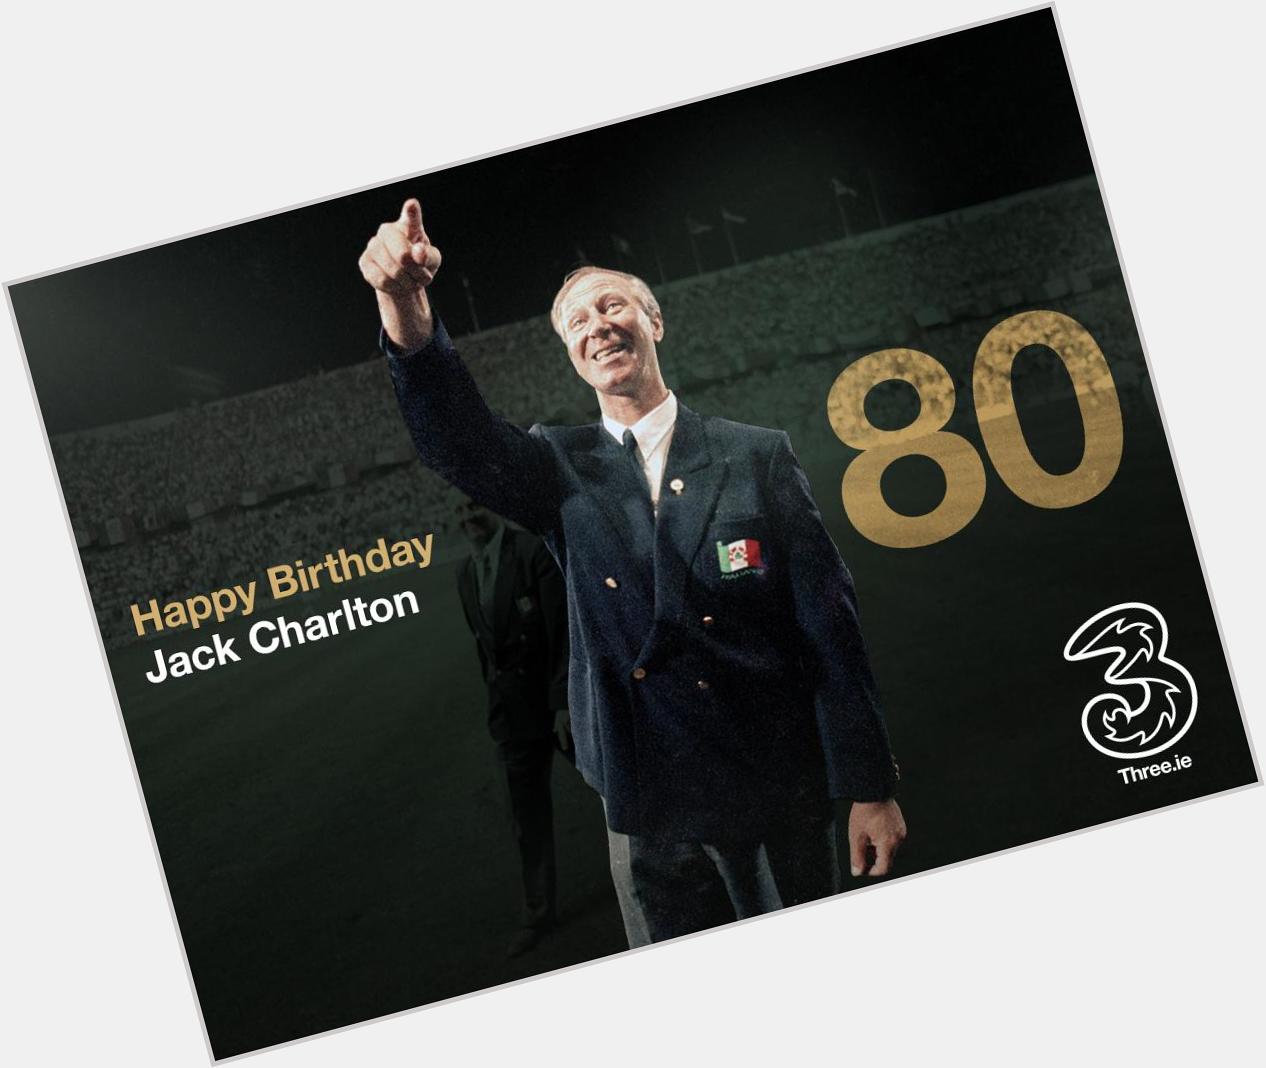 Jack Charlton gave us football memories we\ll cherish forever. Happy 80th birthday to the big fella! 